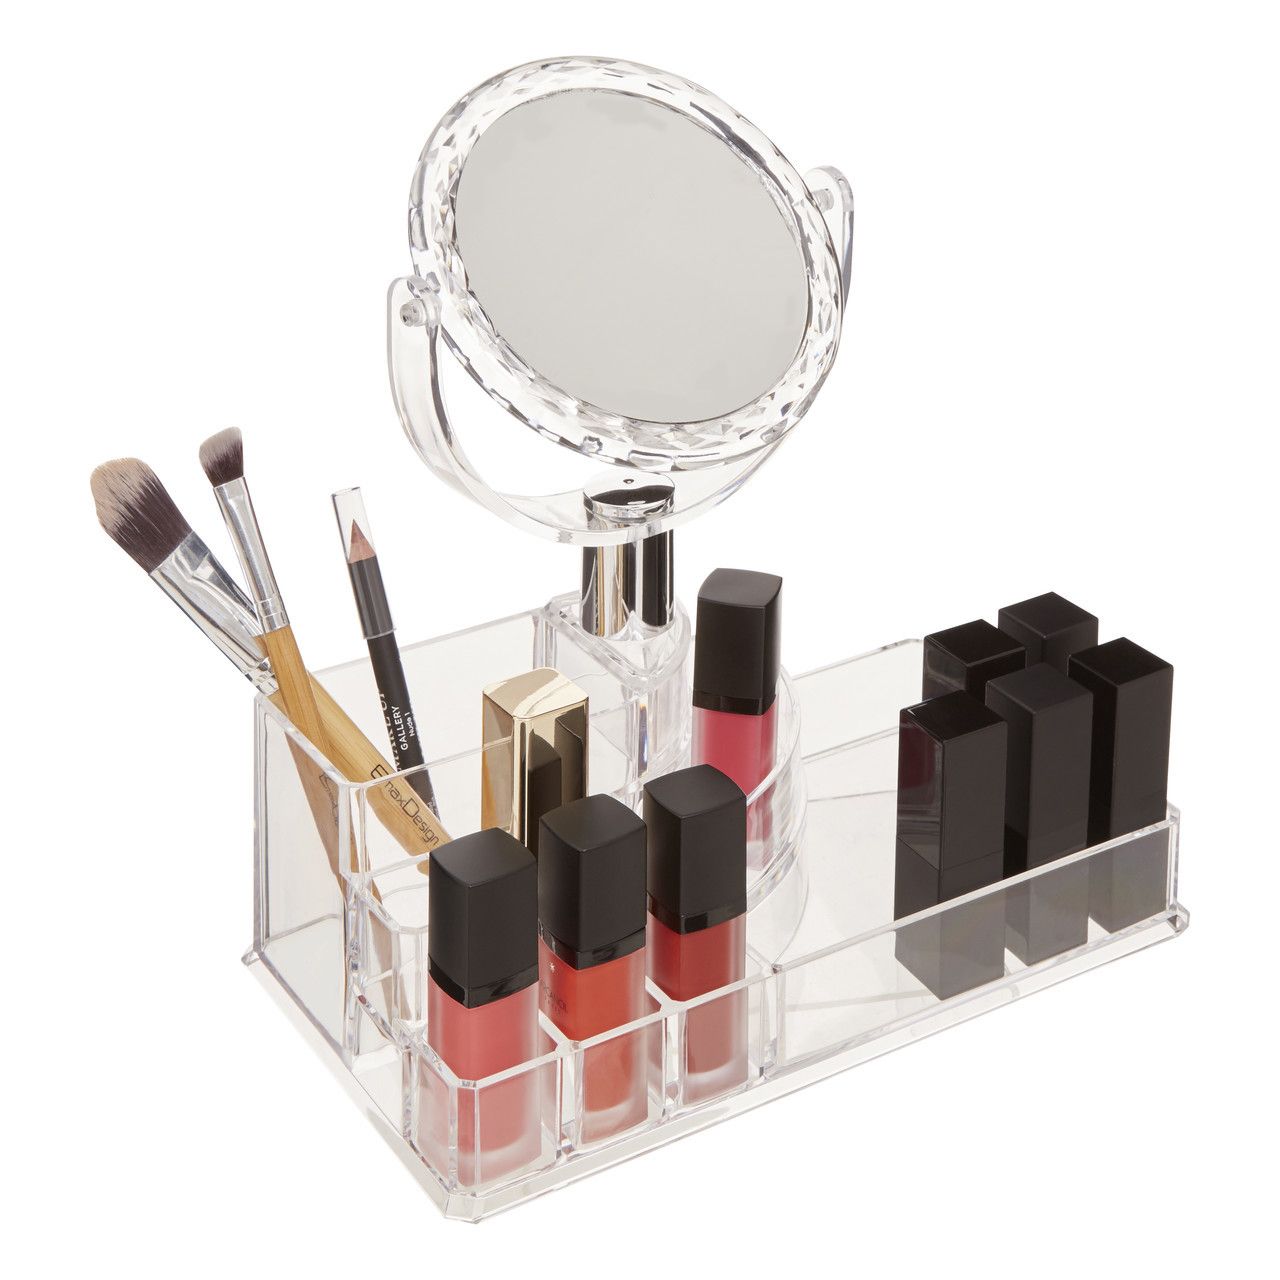 Homewares Cosmetic Organiser With Mirror